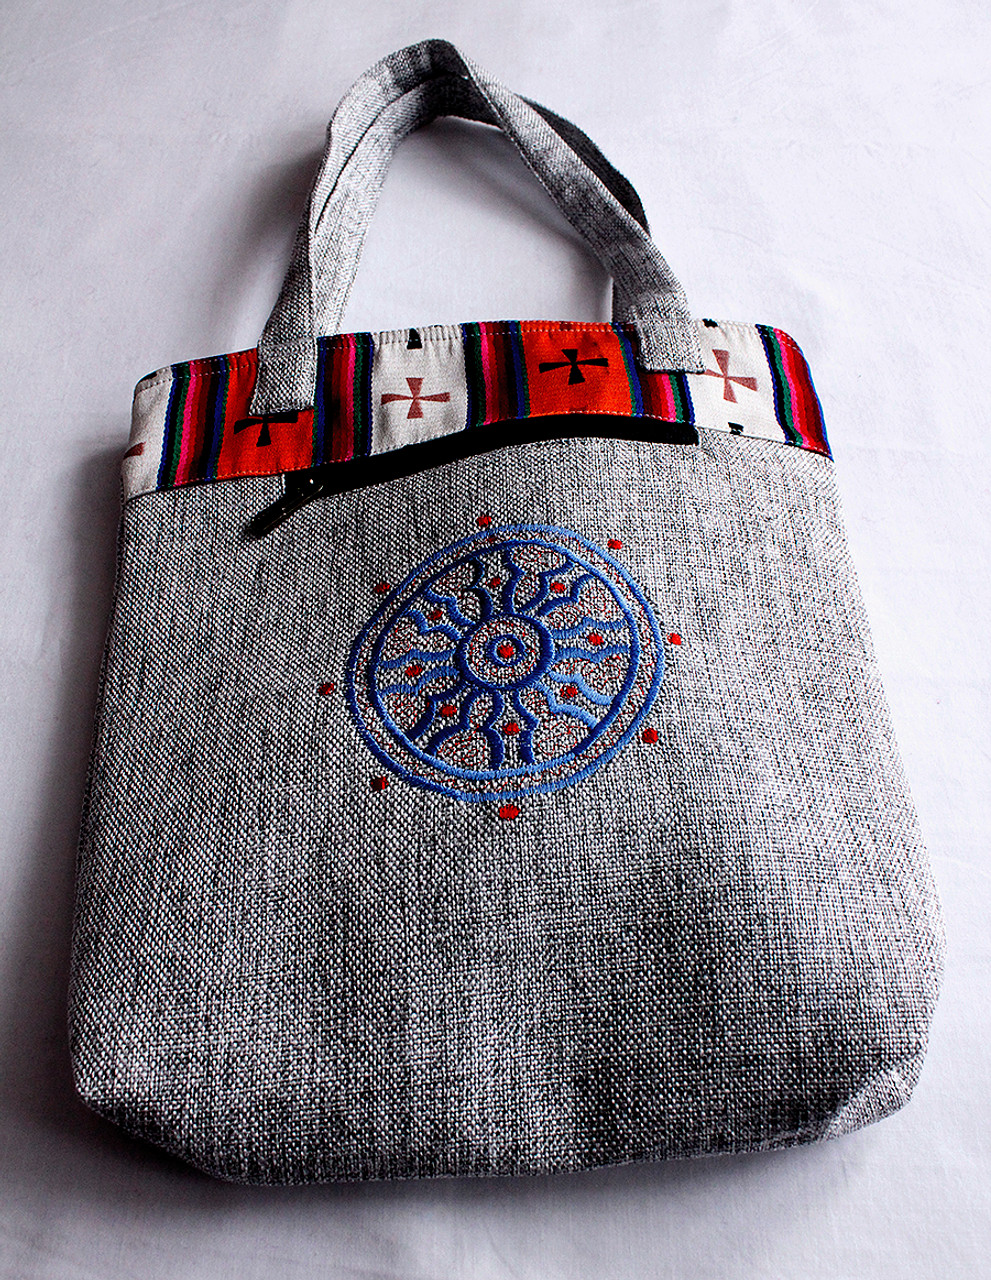 Tibetan bag | Order wholesale bags direct from Nepal |